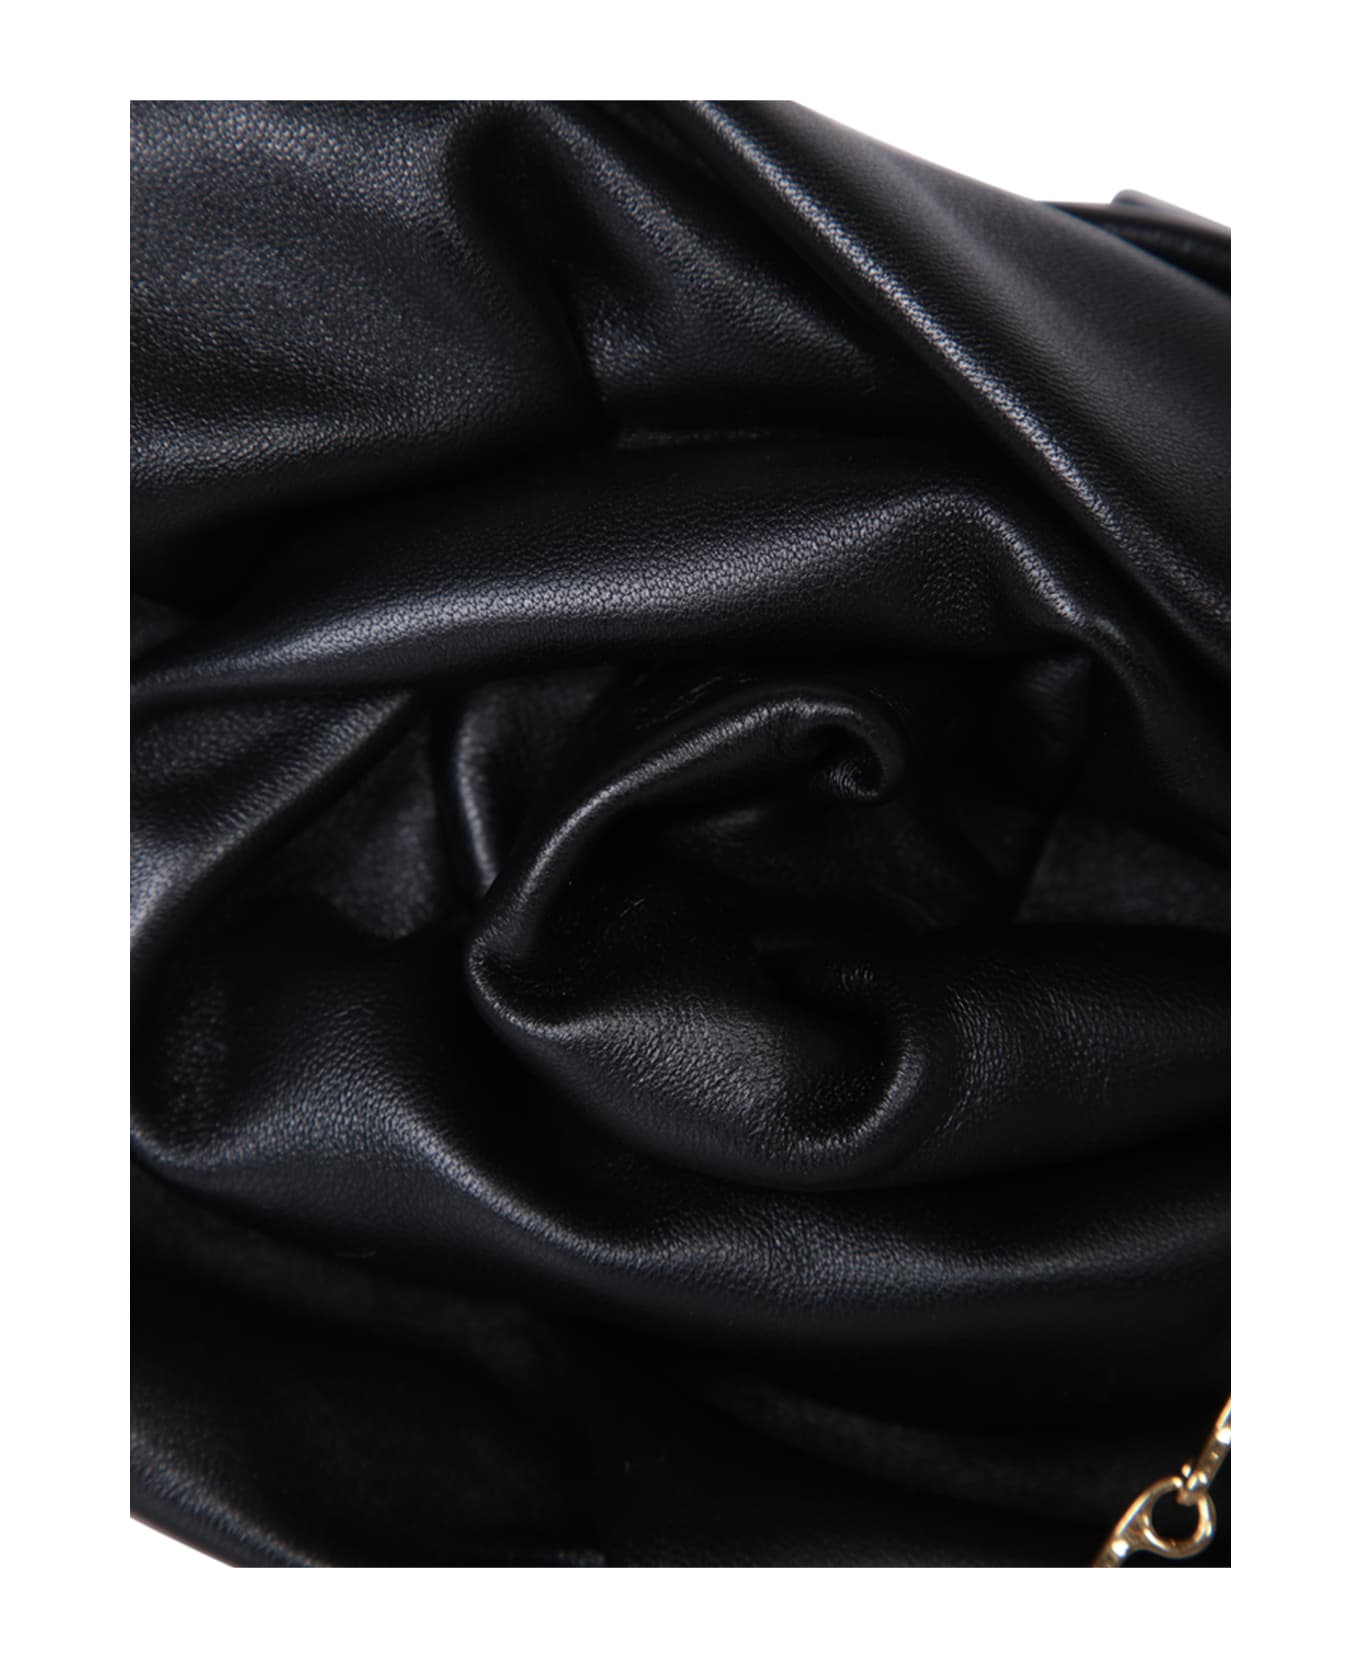 Burberry Rose Black Clutch Bag - Black